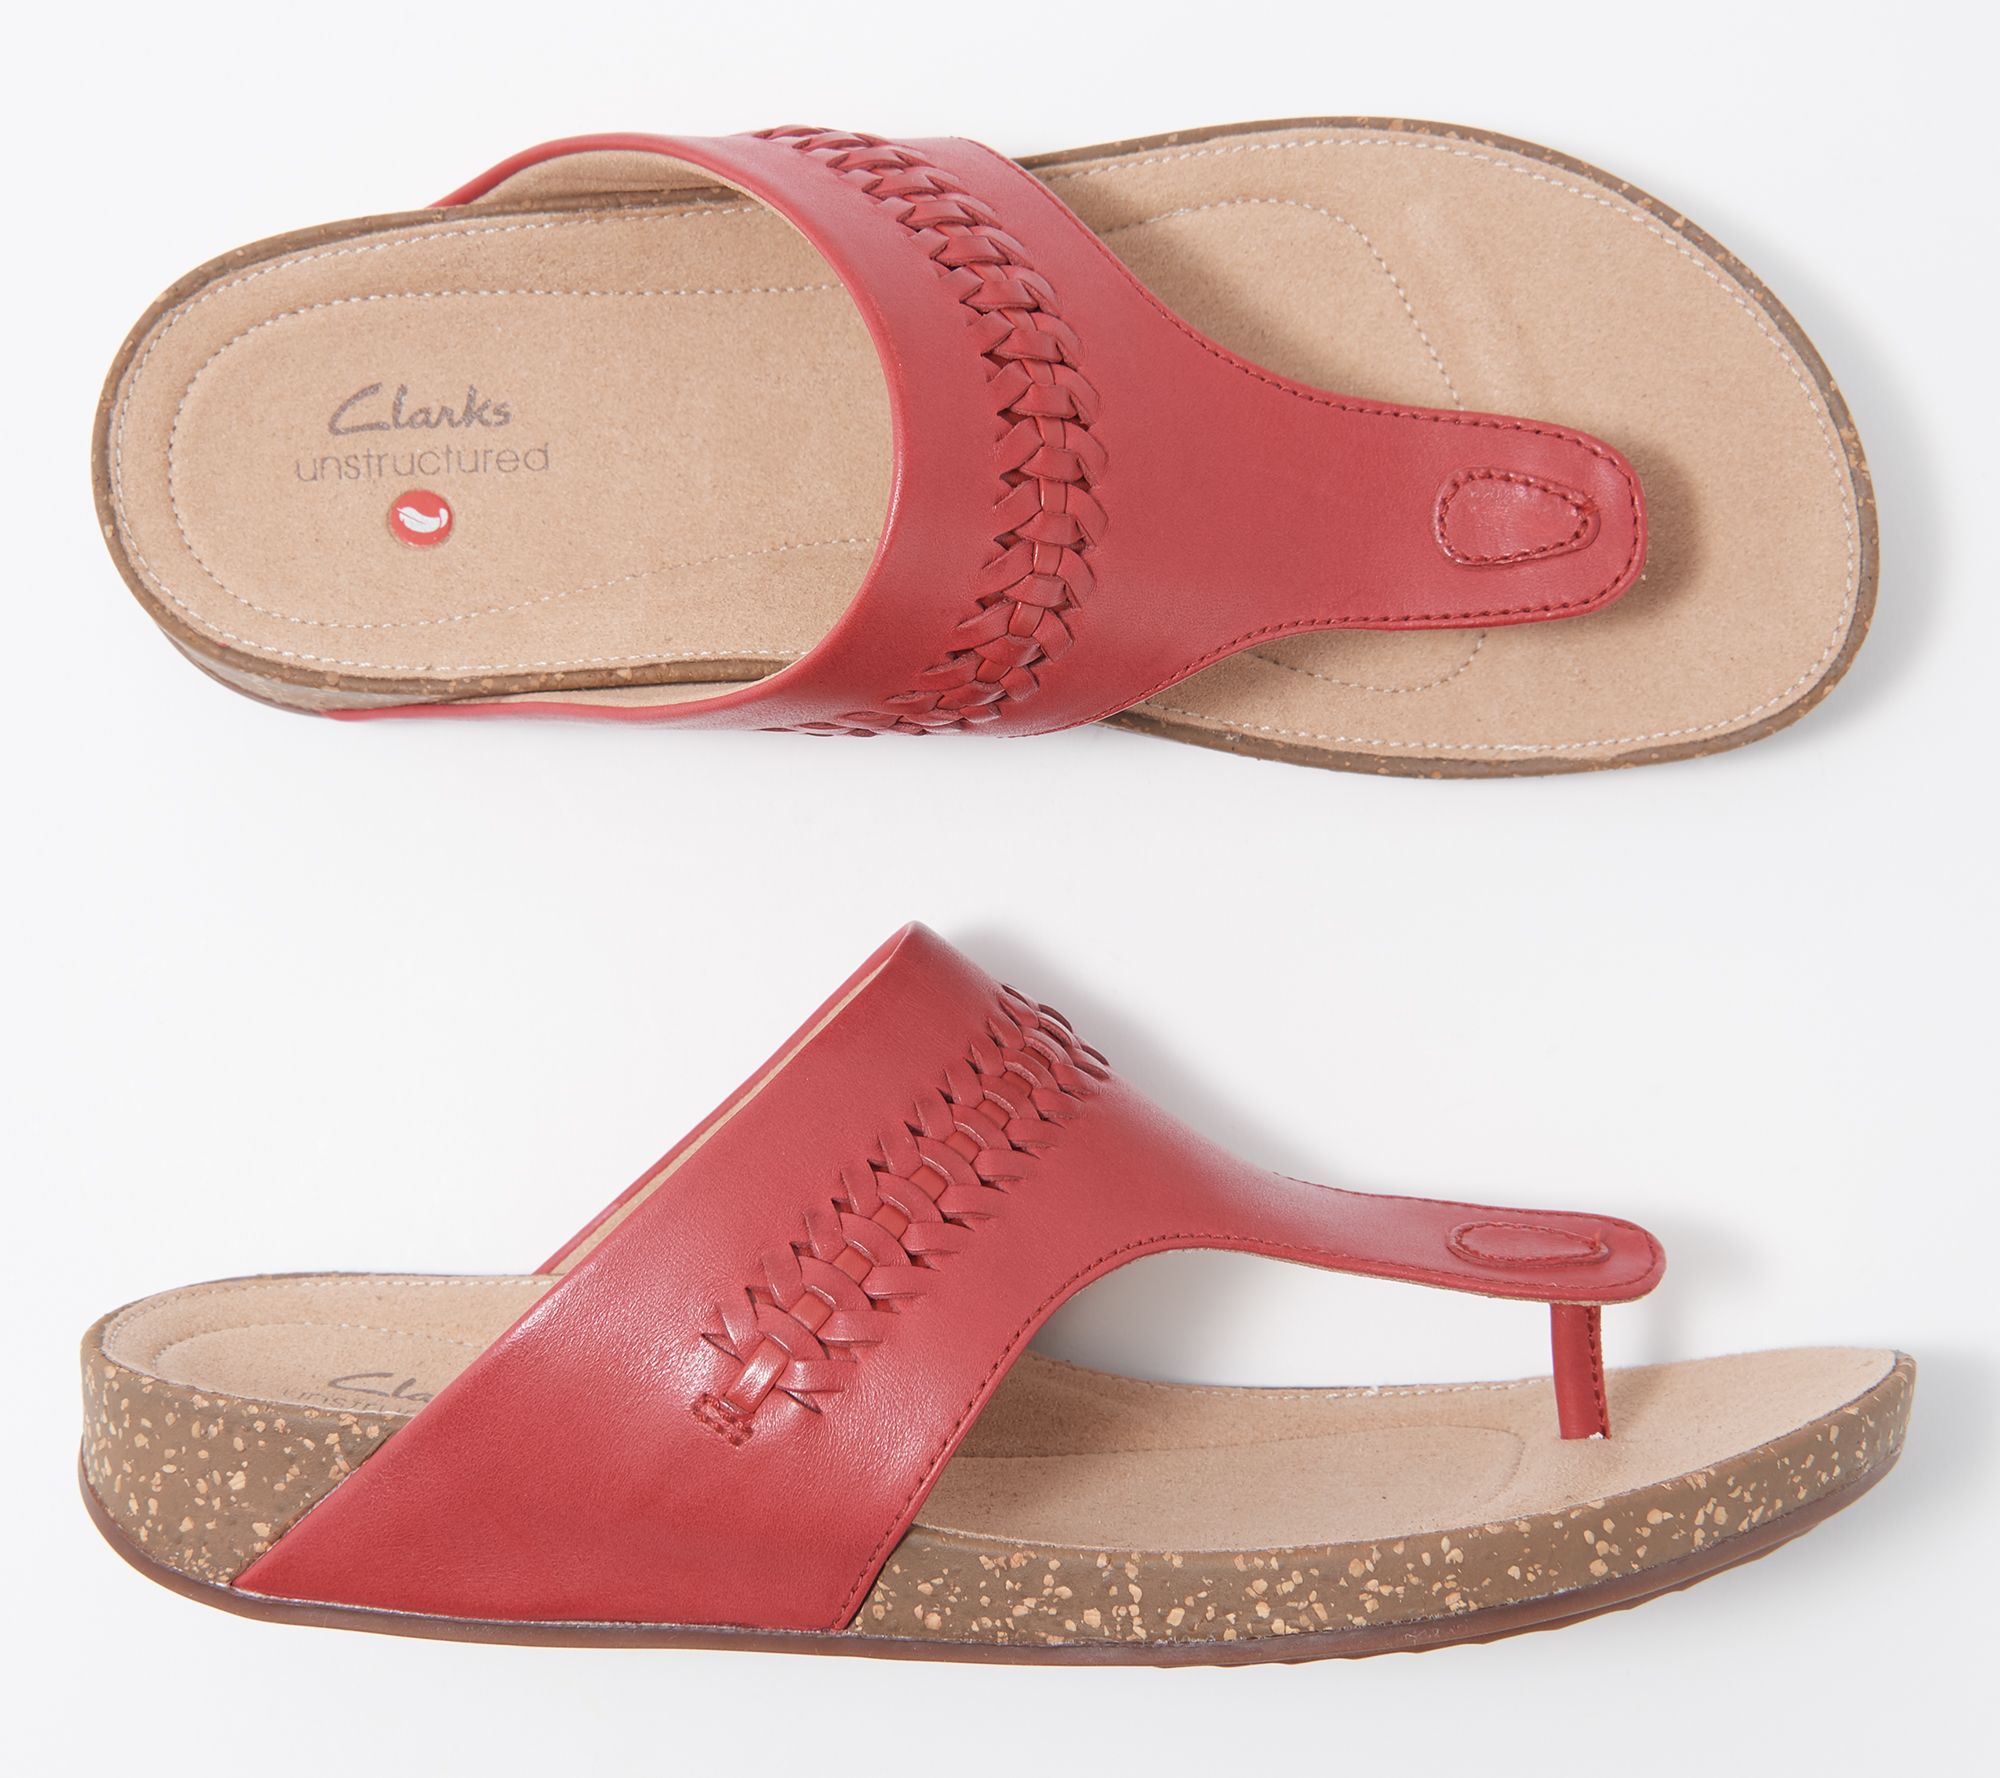 Clarks Unstructured Leather Thong Sandals - Un Perri Vibe - QVC.com